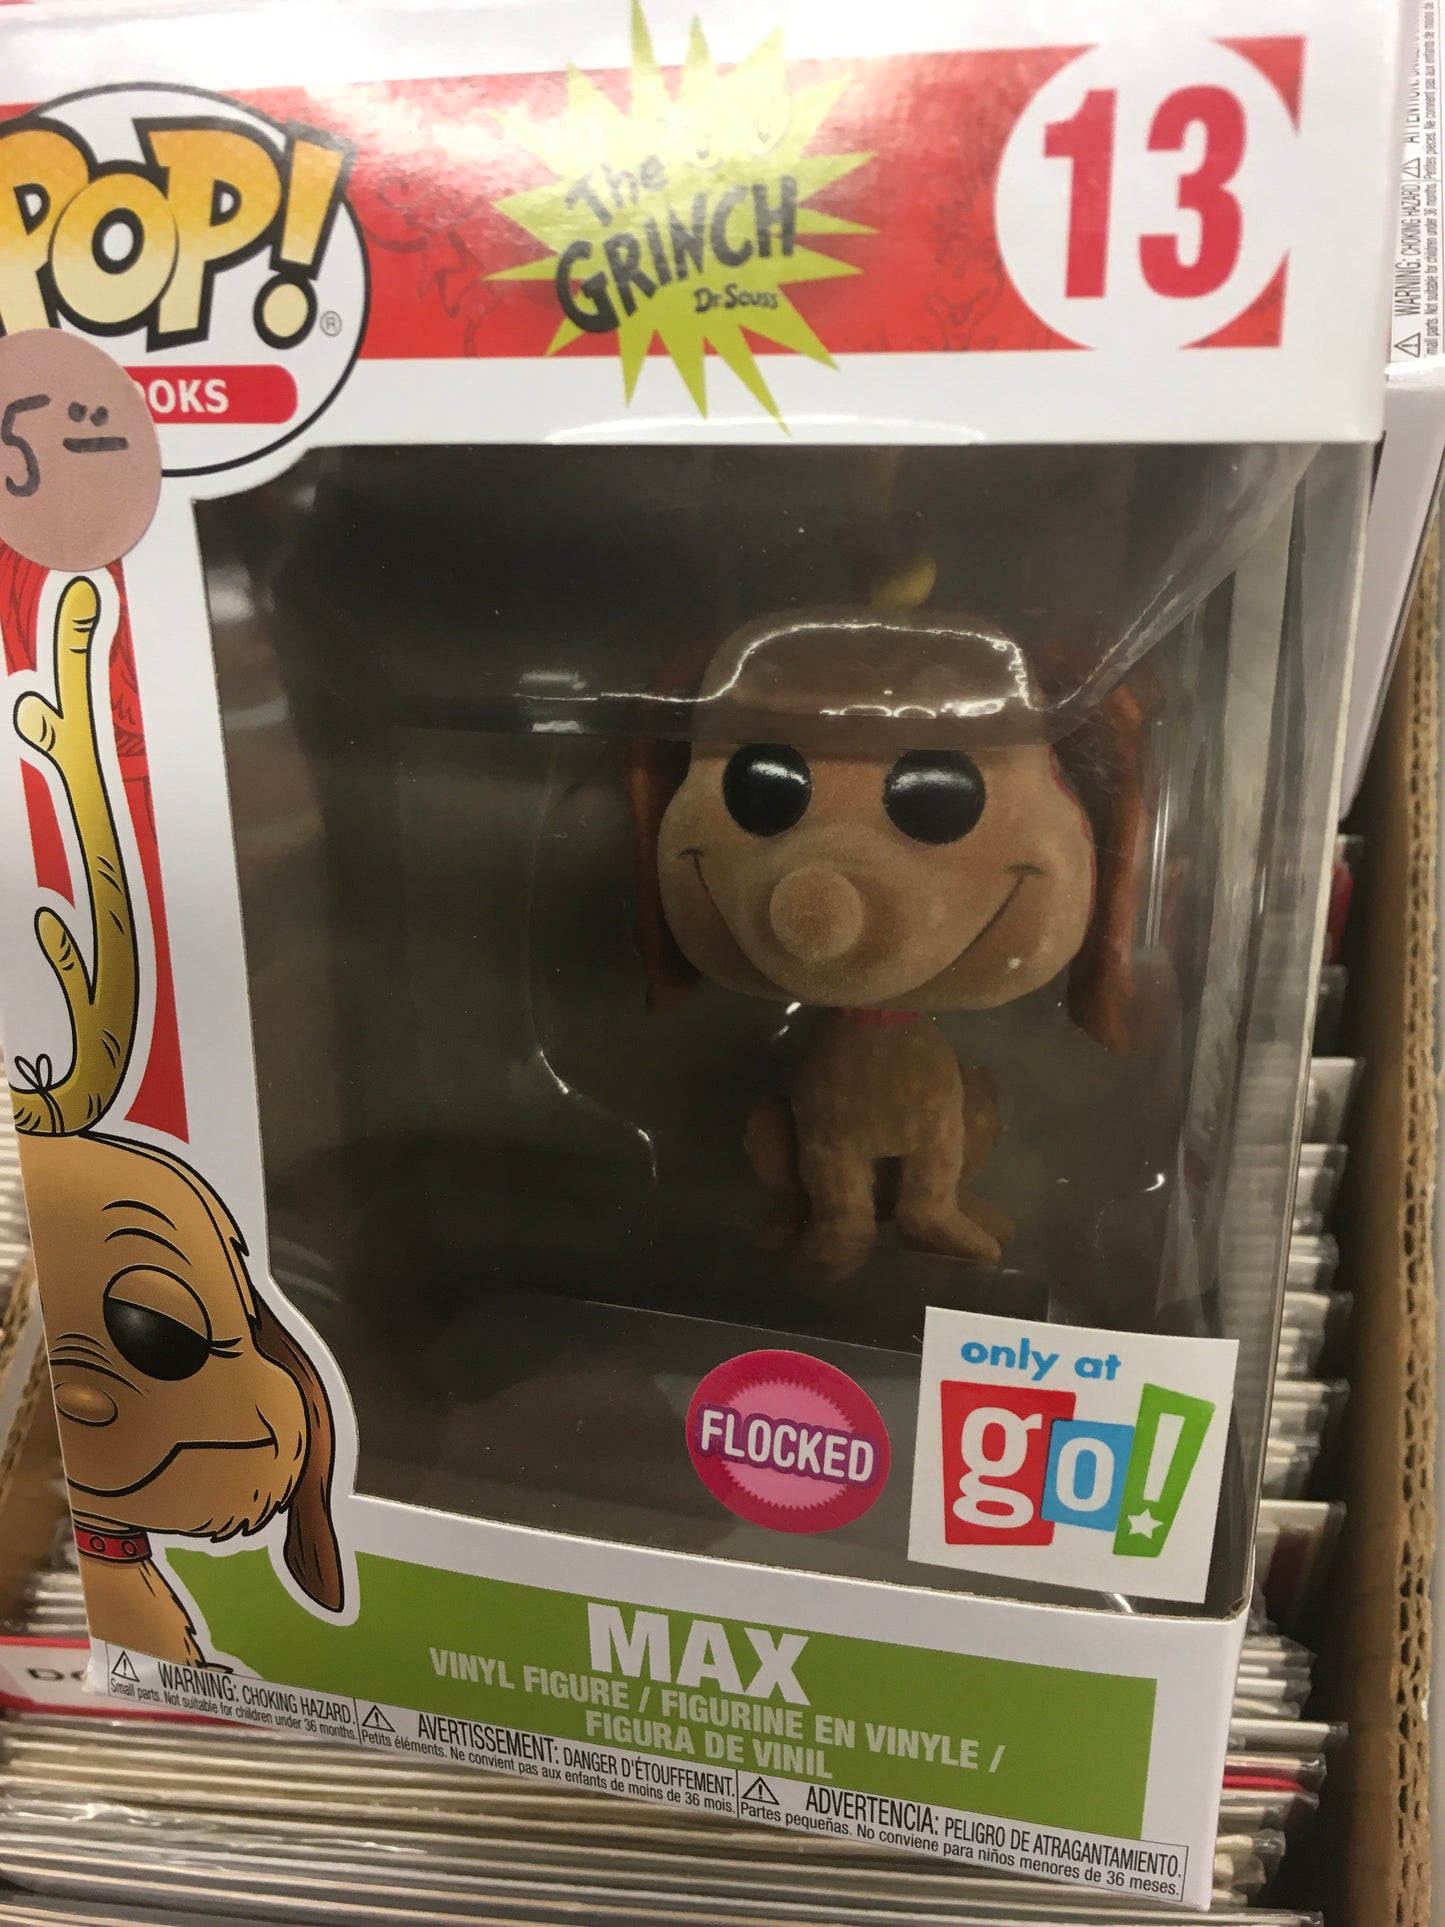 Grinch Max Flocked Go exclusive Funko Pop! VINYL Figure